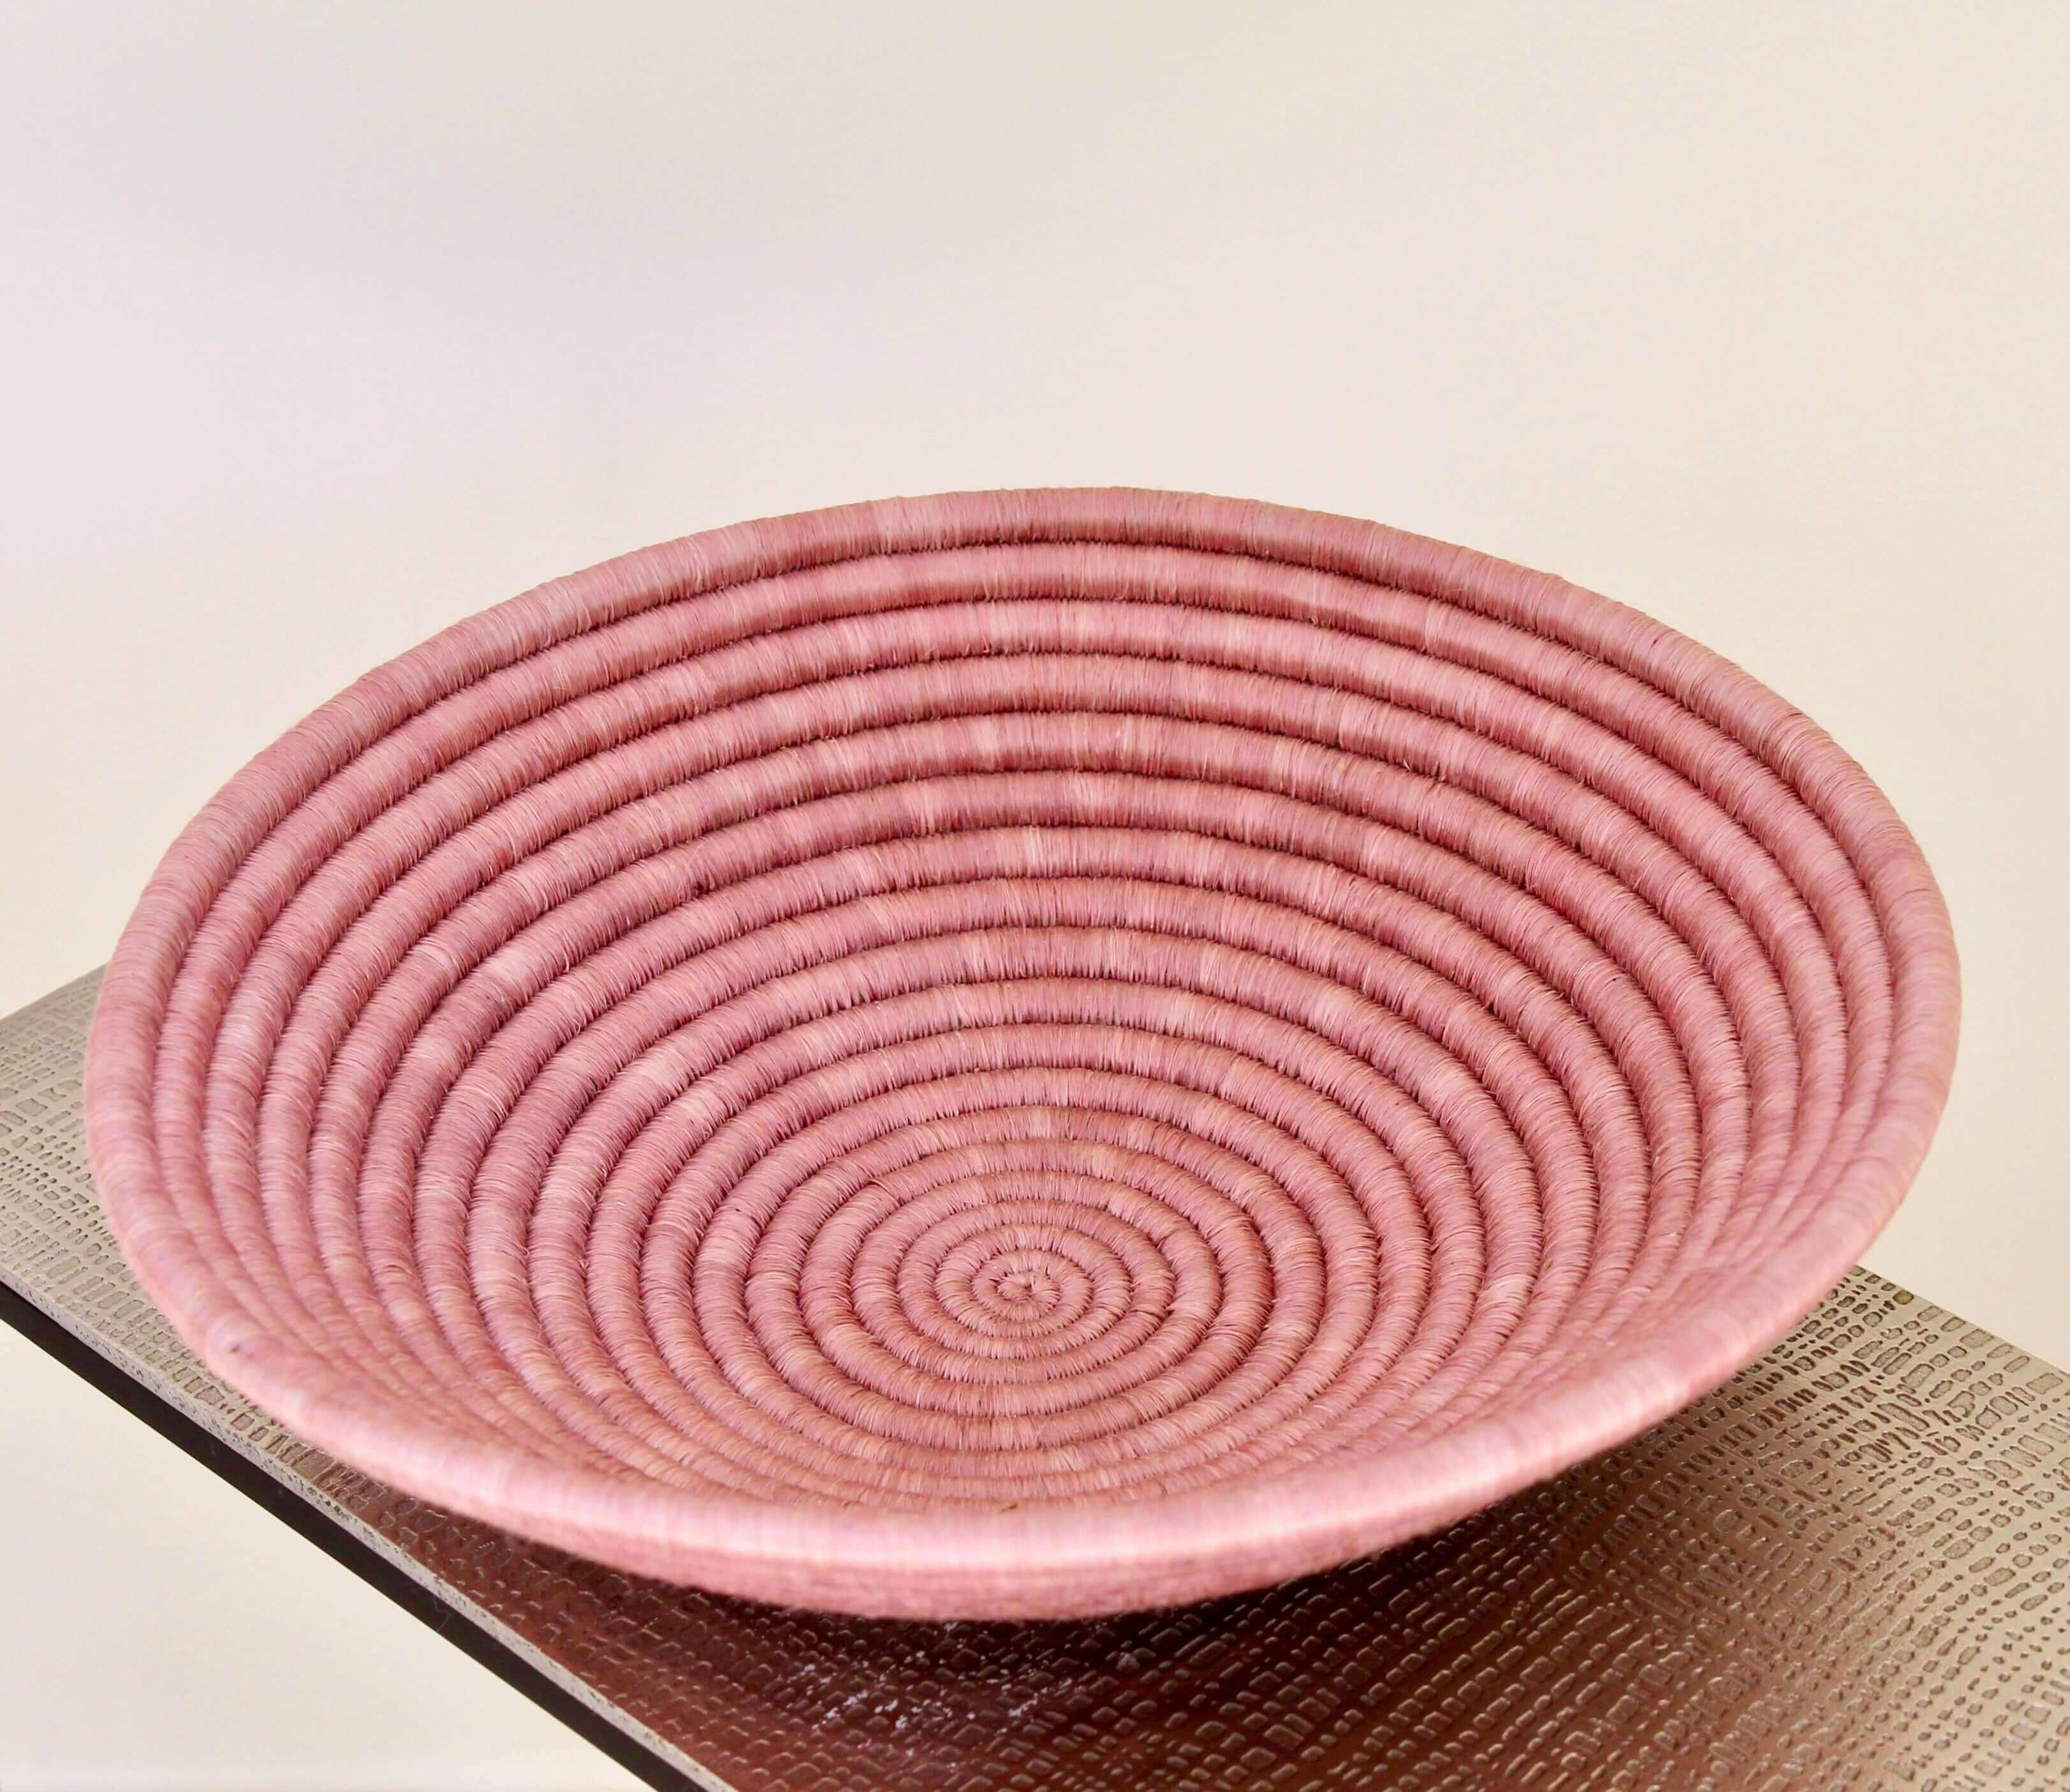 Ethically handwoven blush bowl